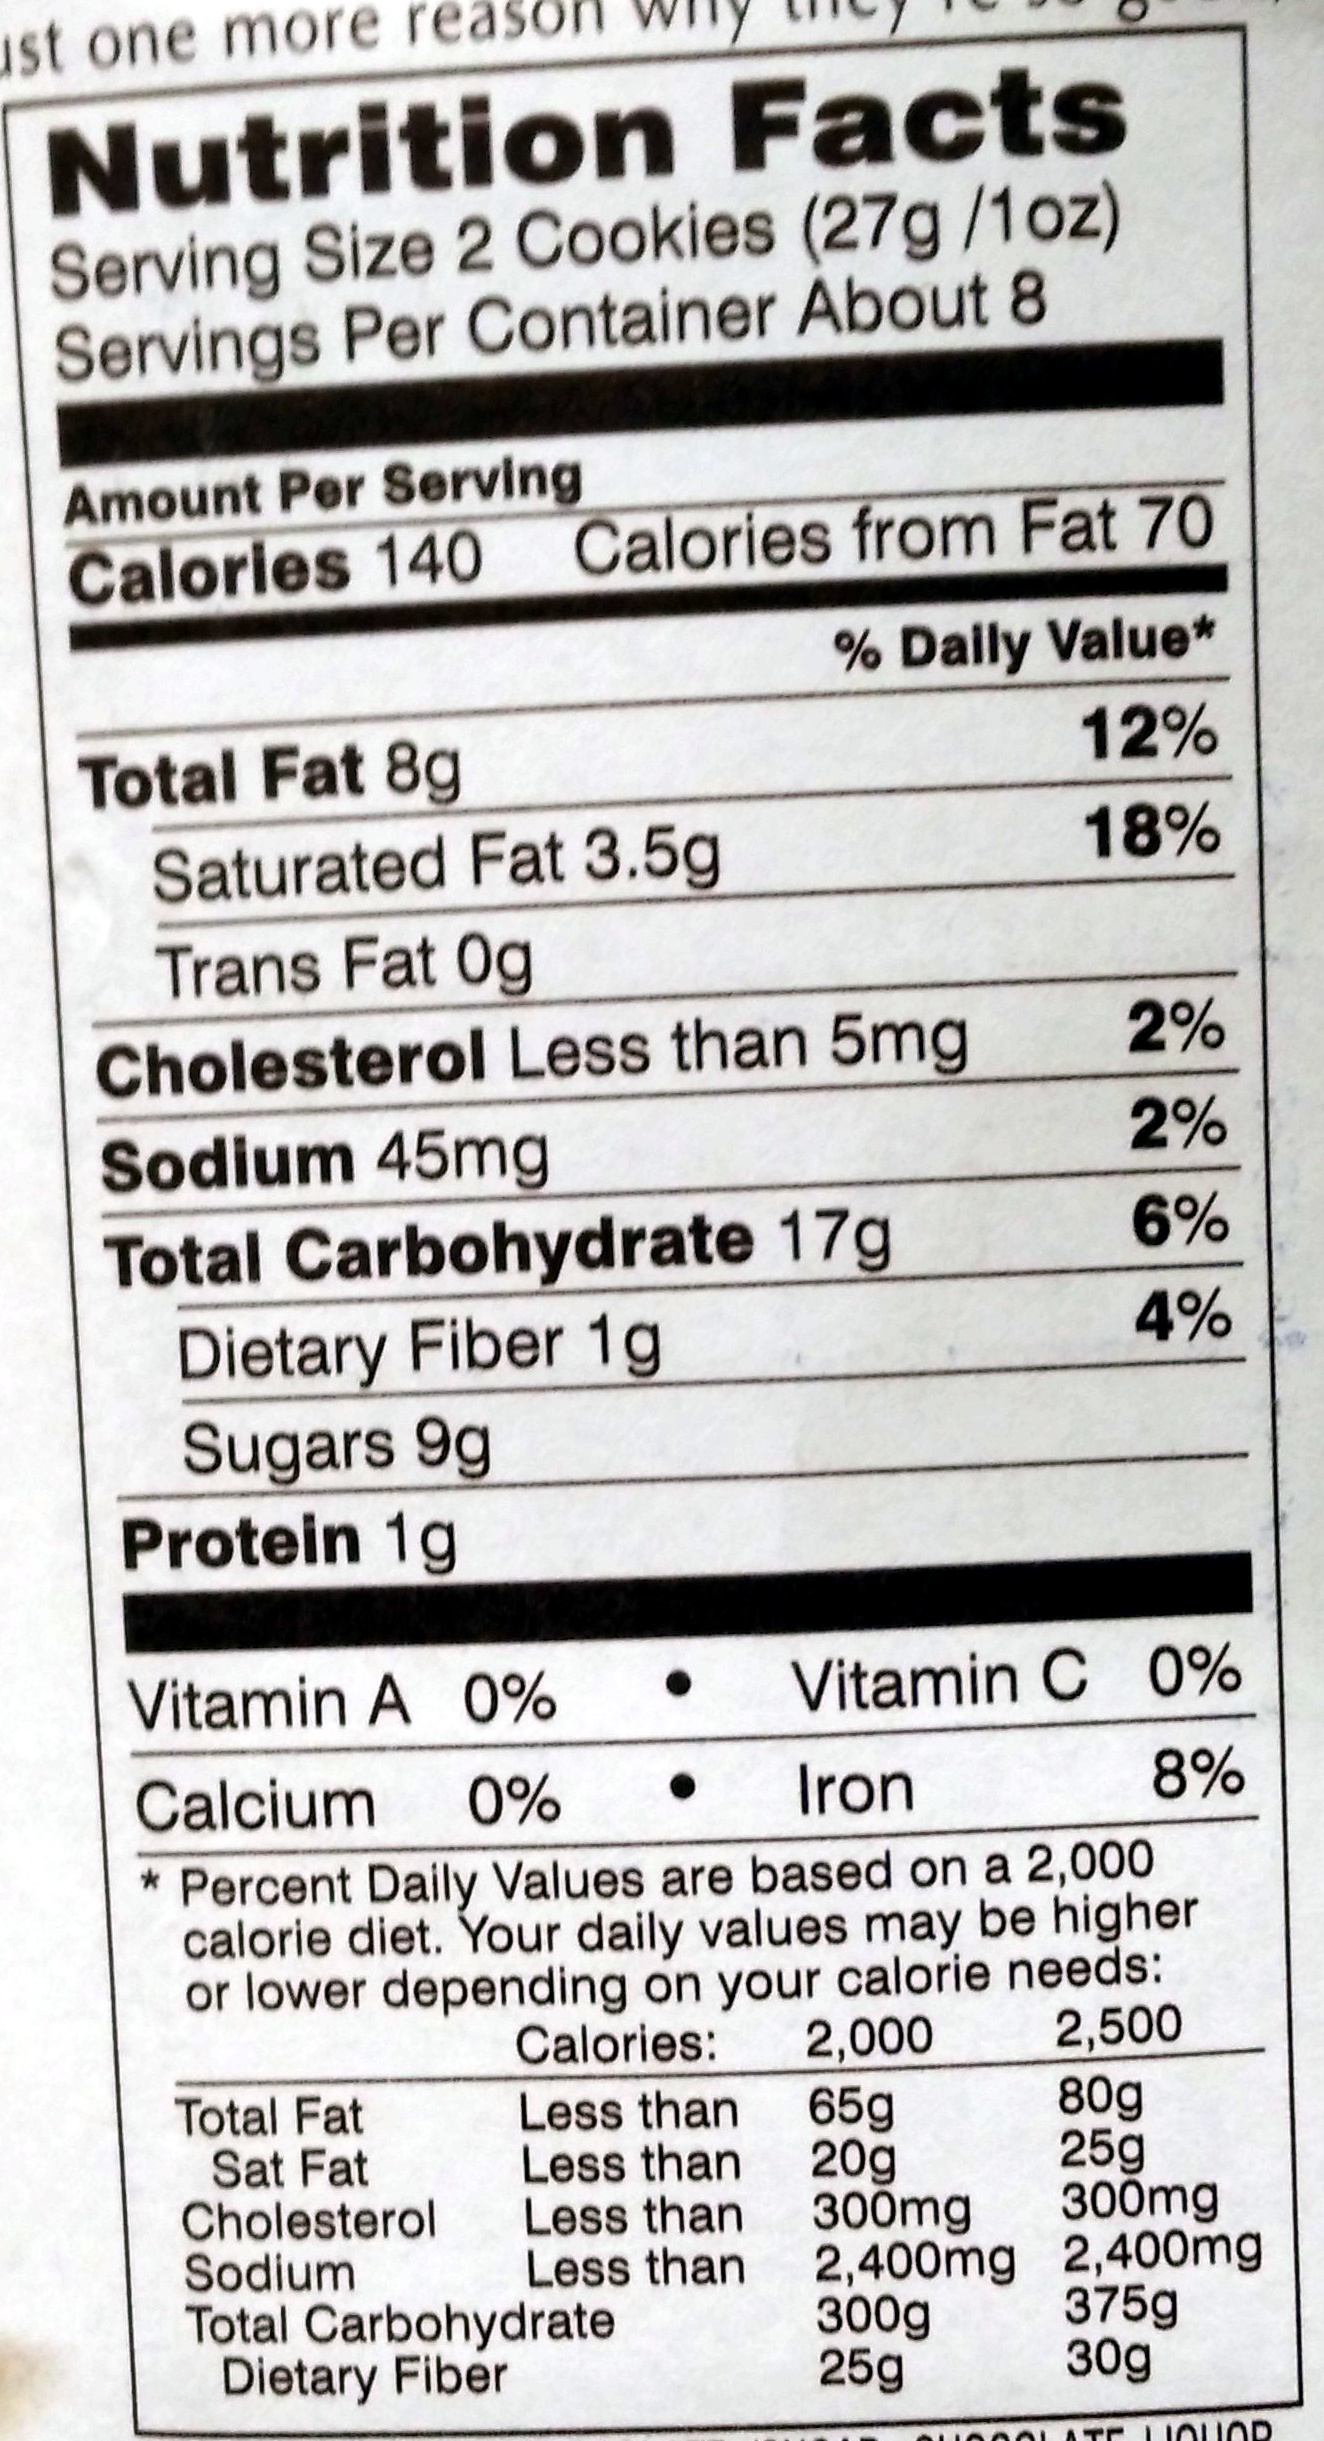 Pepperidge farm cookies choc - Nutrition facts